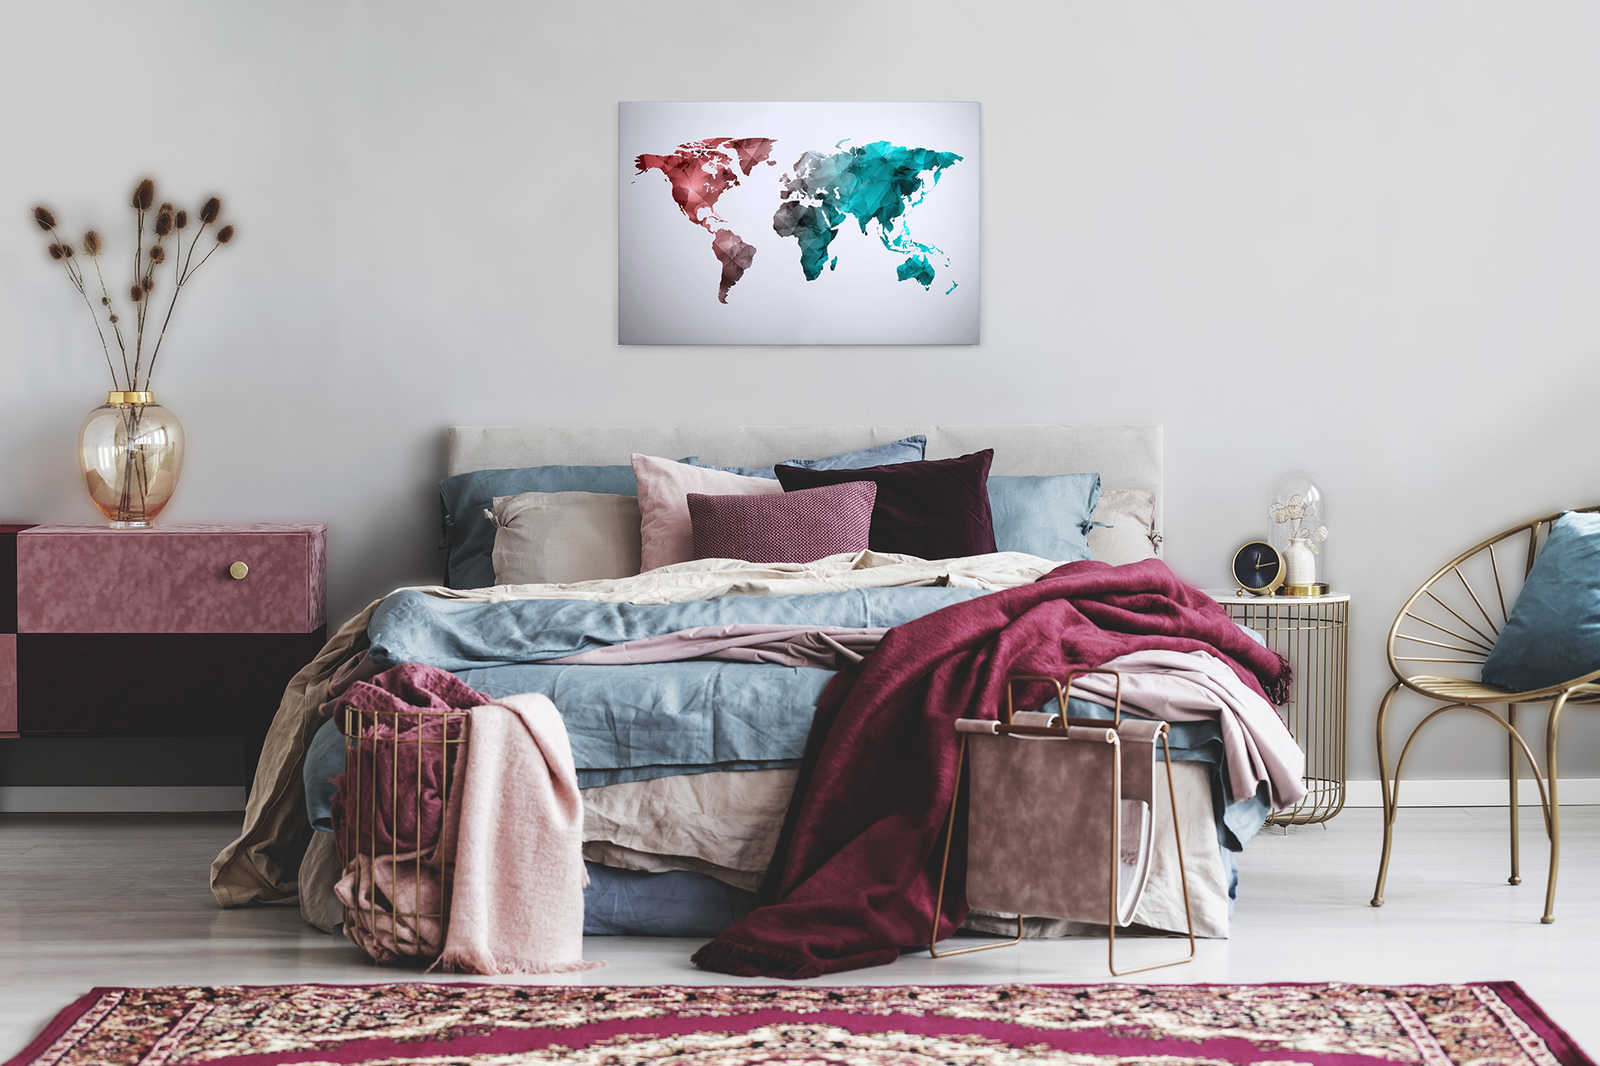             Lienzo con mapamundi de elementos gráficos | WorldGrafic 2 - 0,90 m x 0,60 m
        